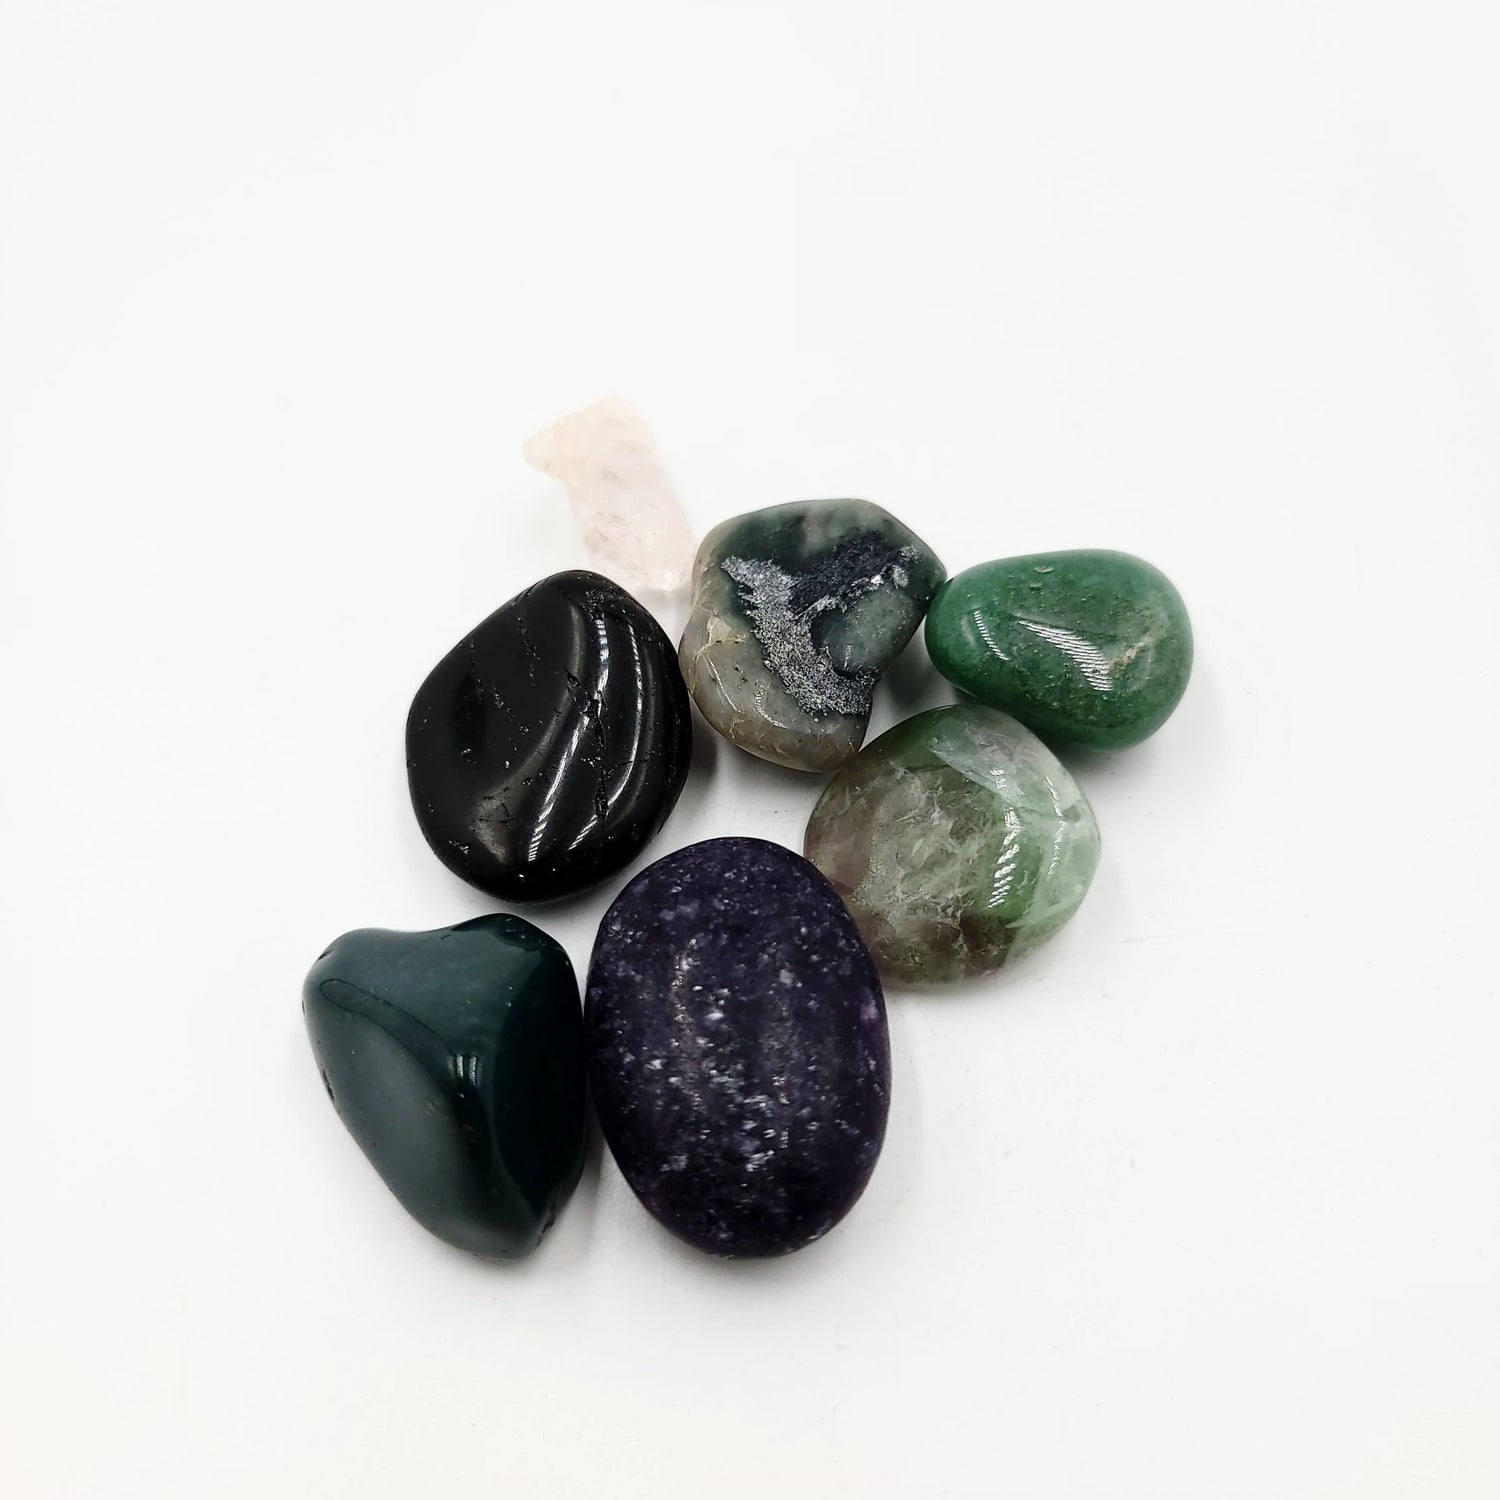 Breathe Easy Allergy Stone Set Crystal Set - Elevated Metaphysical